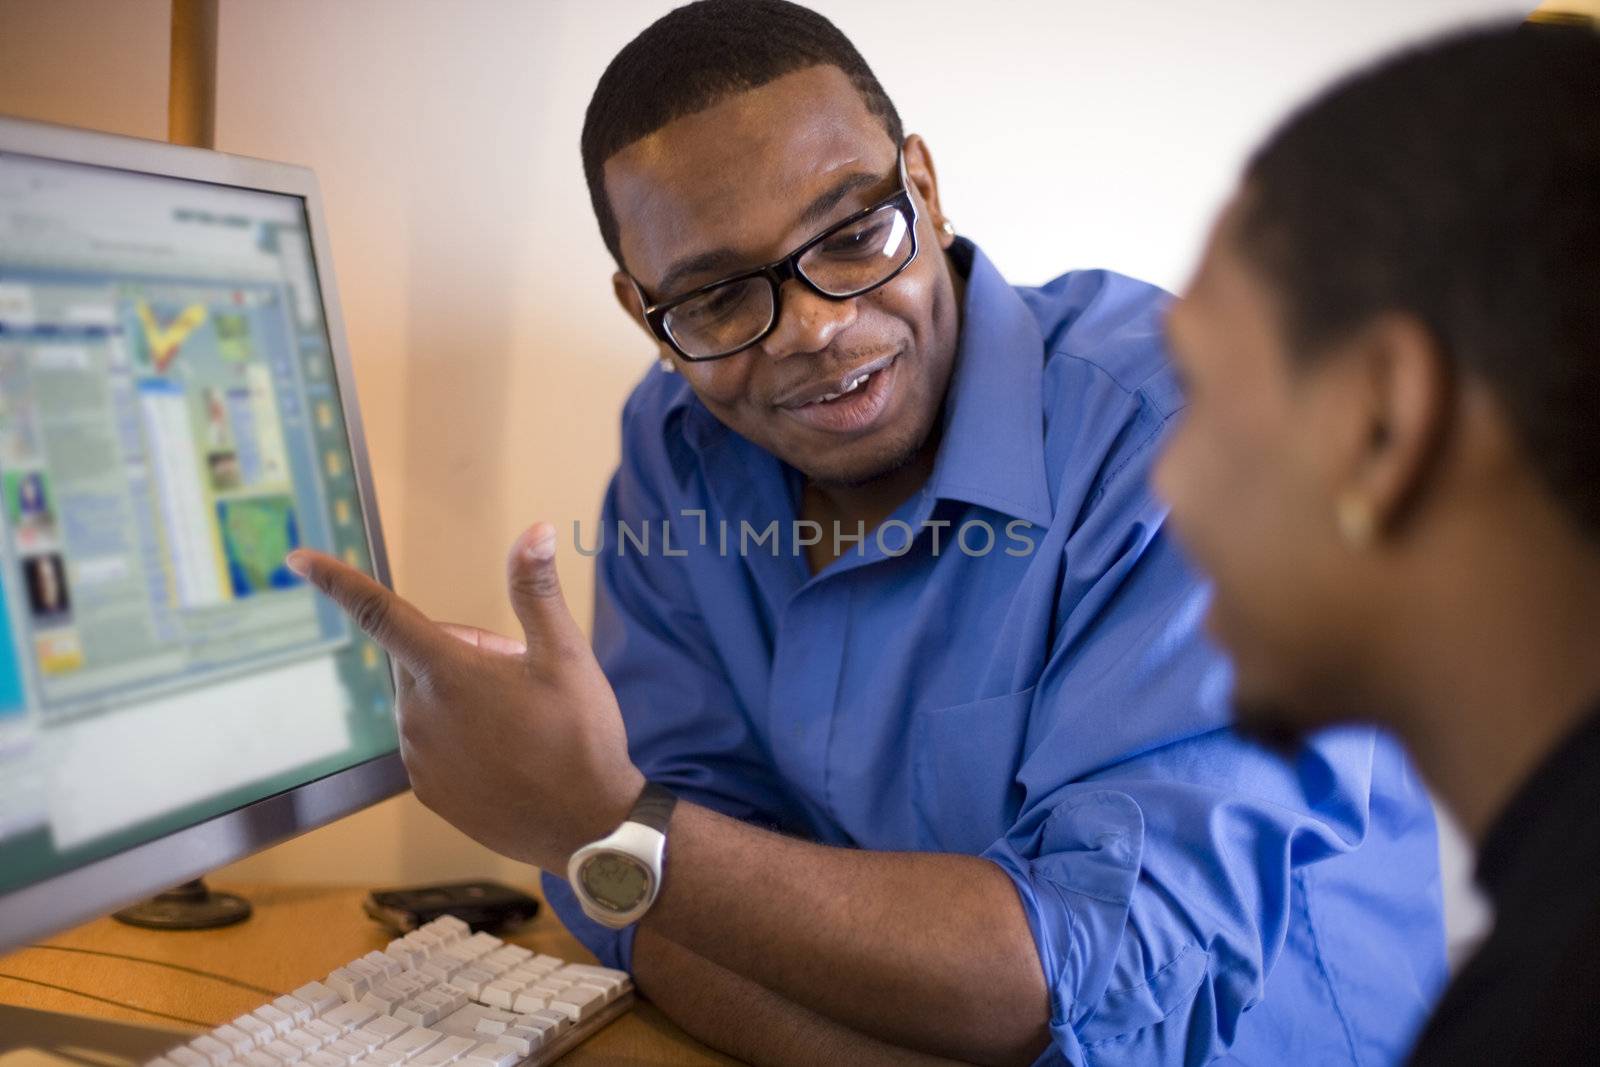 Men working at computer by edbockstock